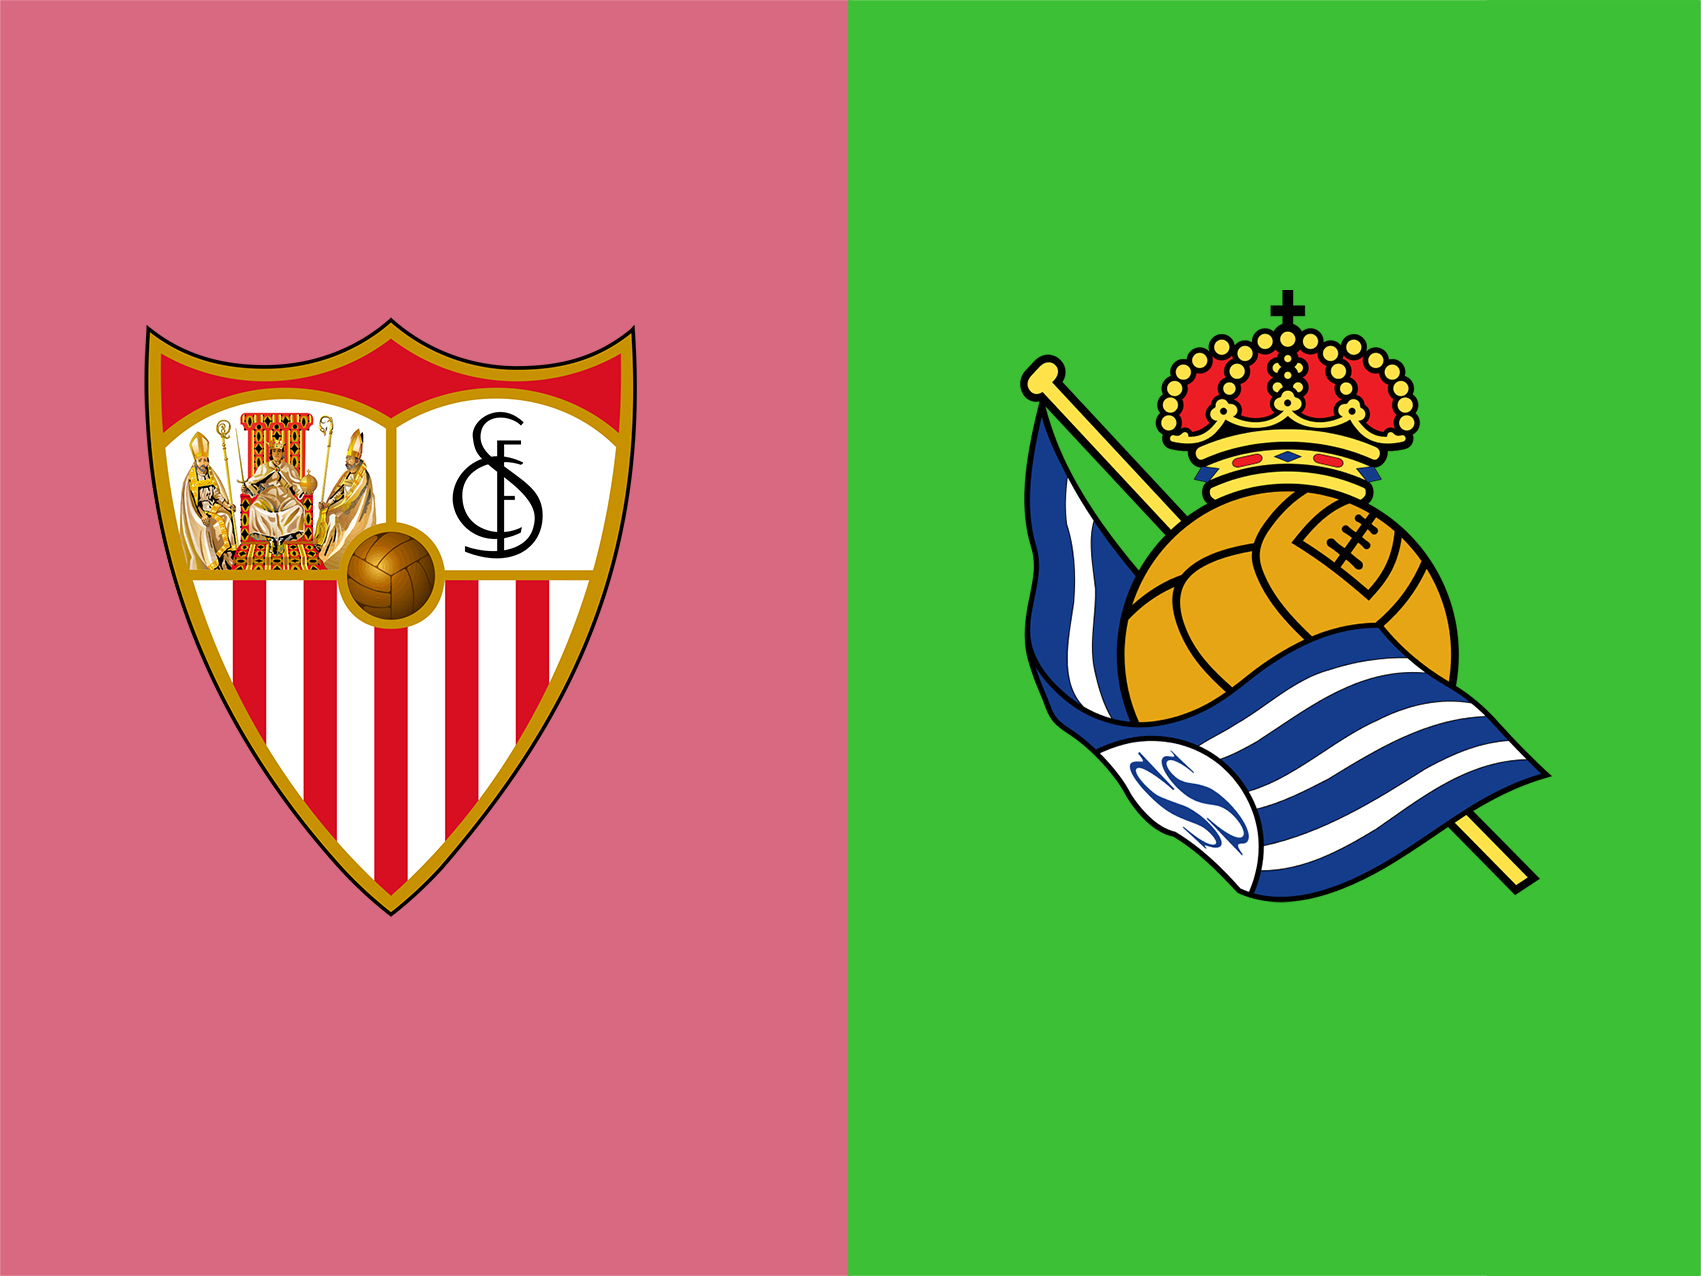 soi-keo-ca-cuoc-bong-da-ngay-19-9-Sevilla-vs-sporting-lisbon-sa-co-noi-dat-khach-b9 1